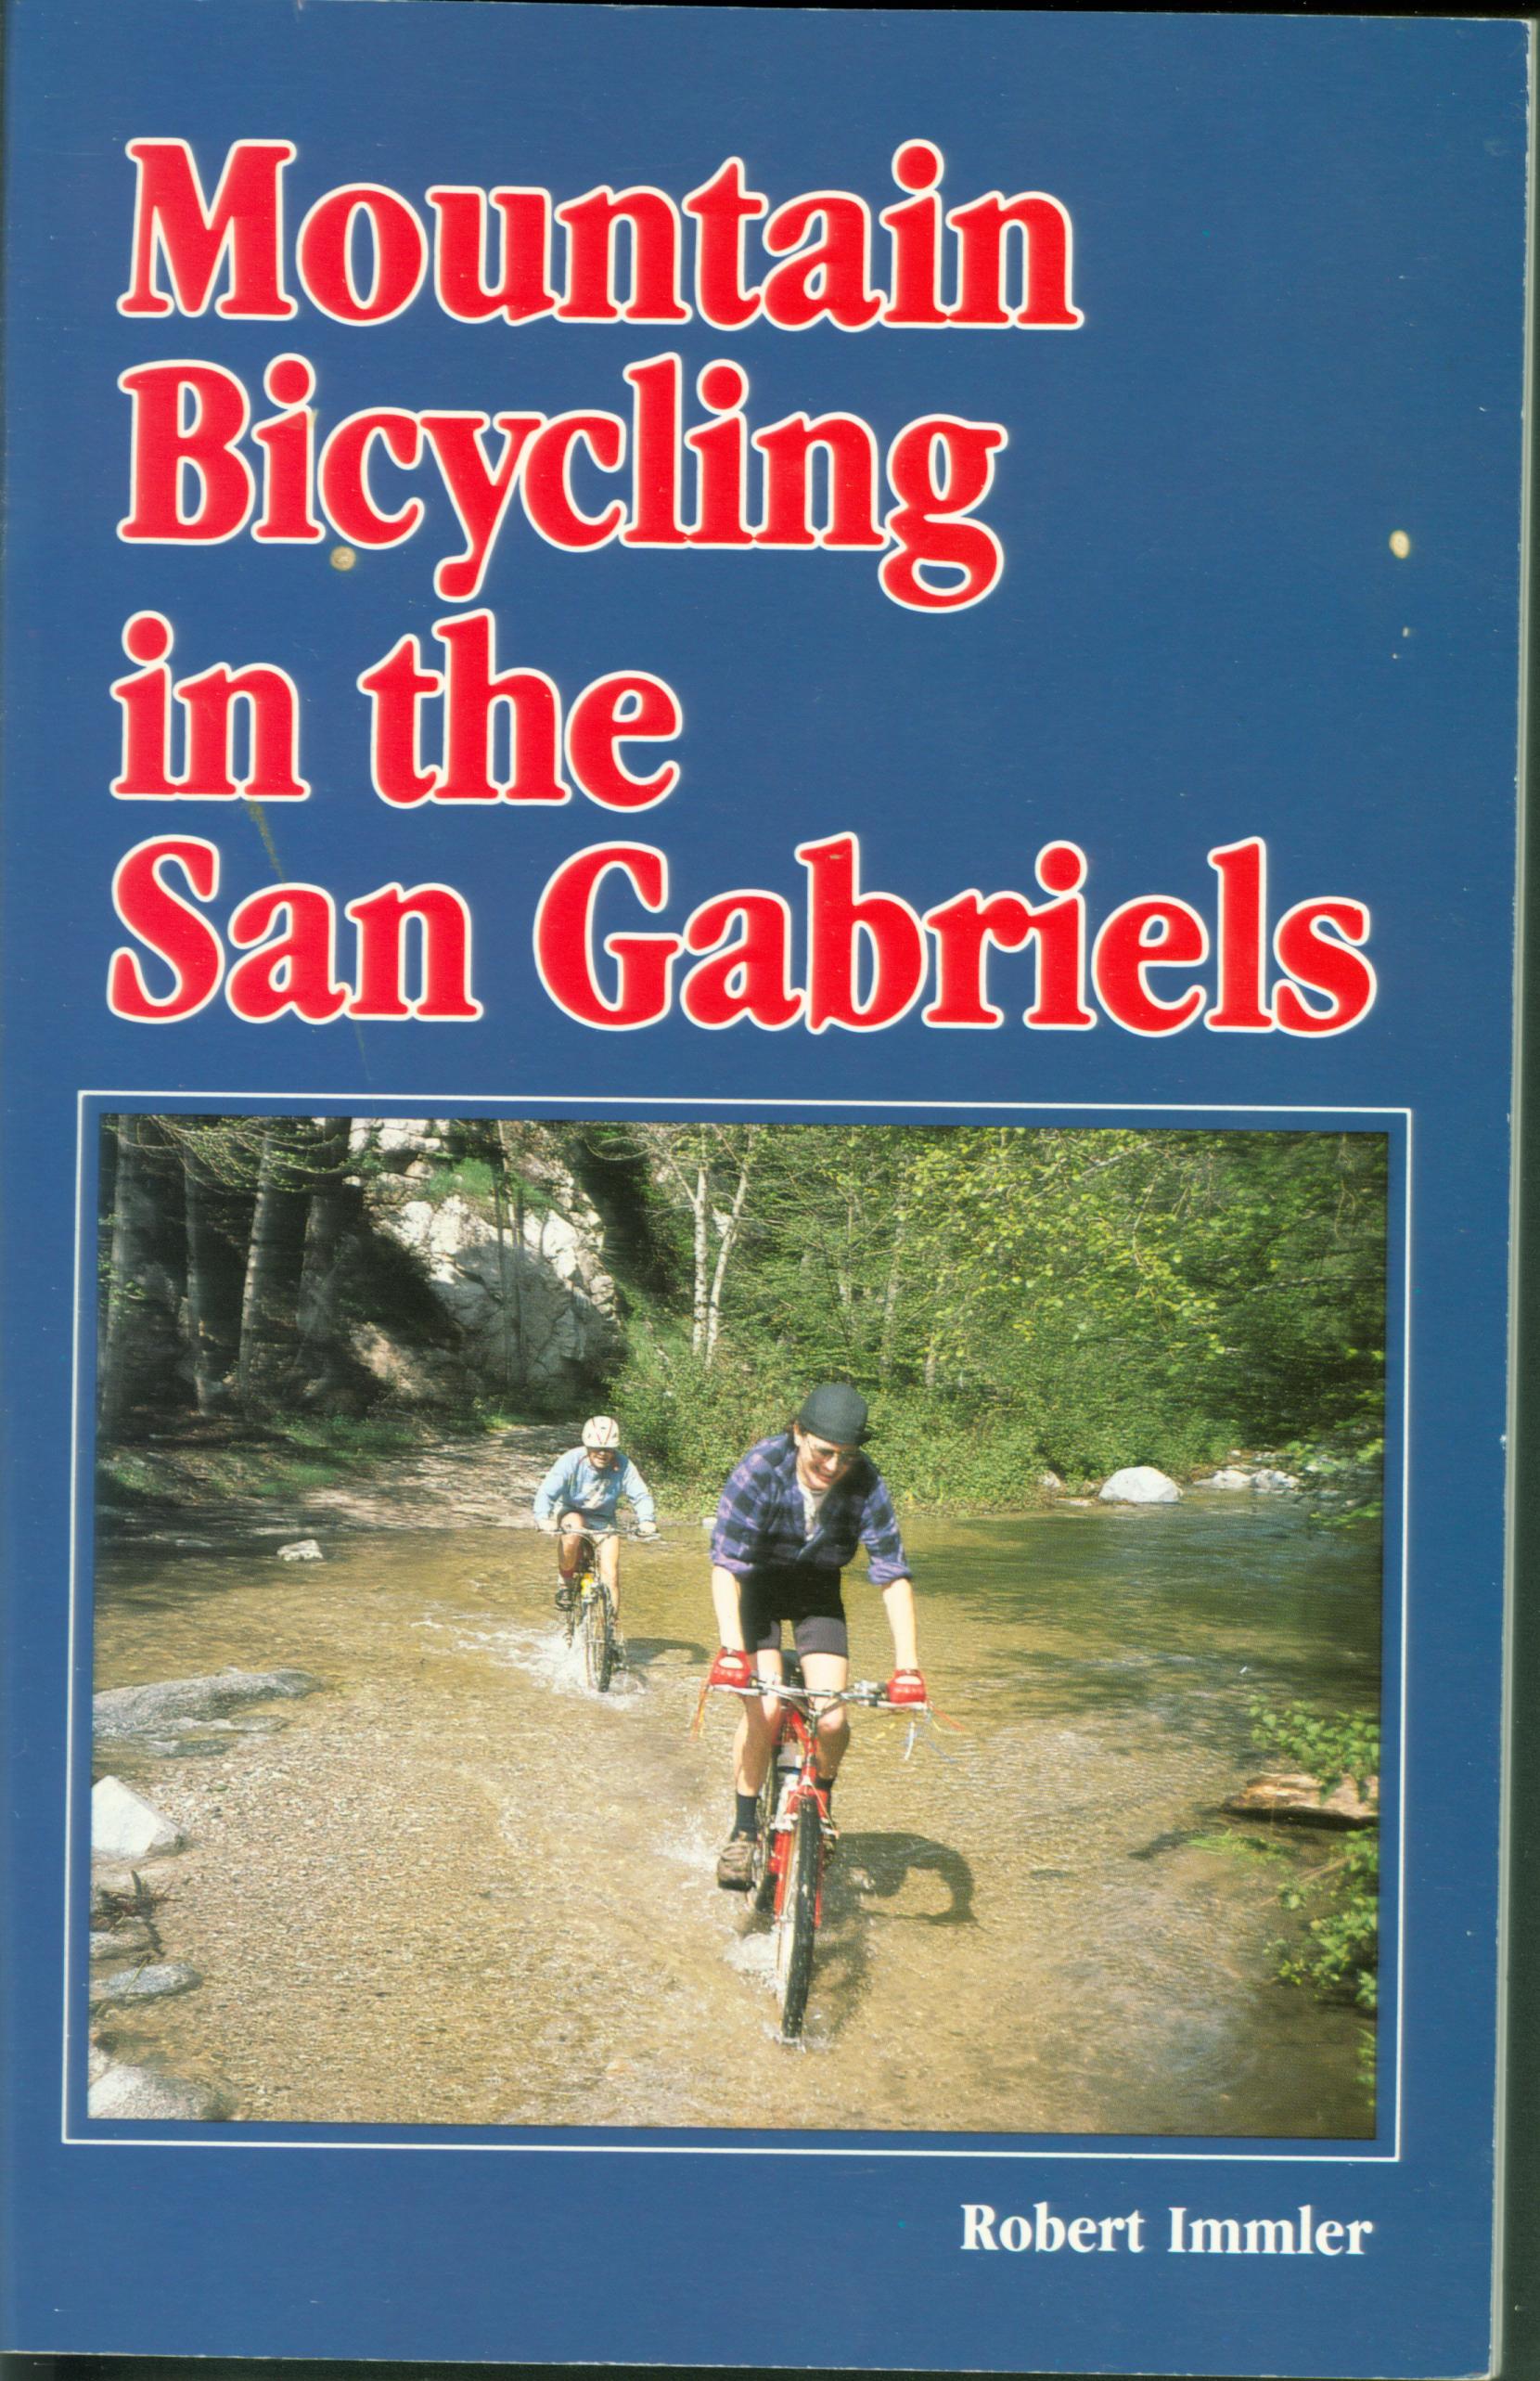 MOUNTAIN BICYCLING IN THE SAN GABRIEL MOUNTAINS.